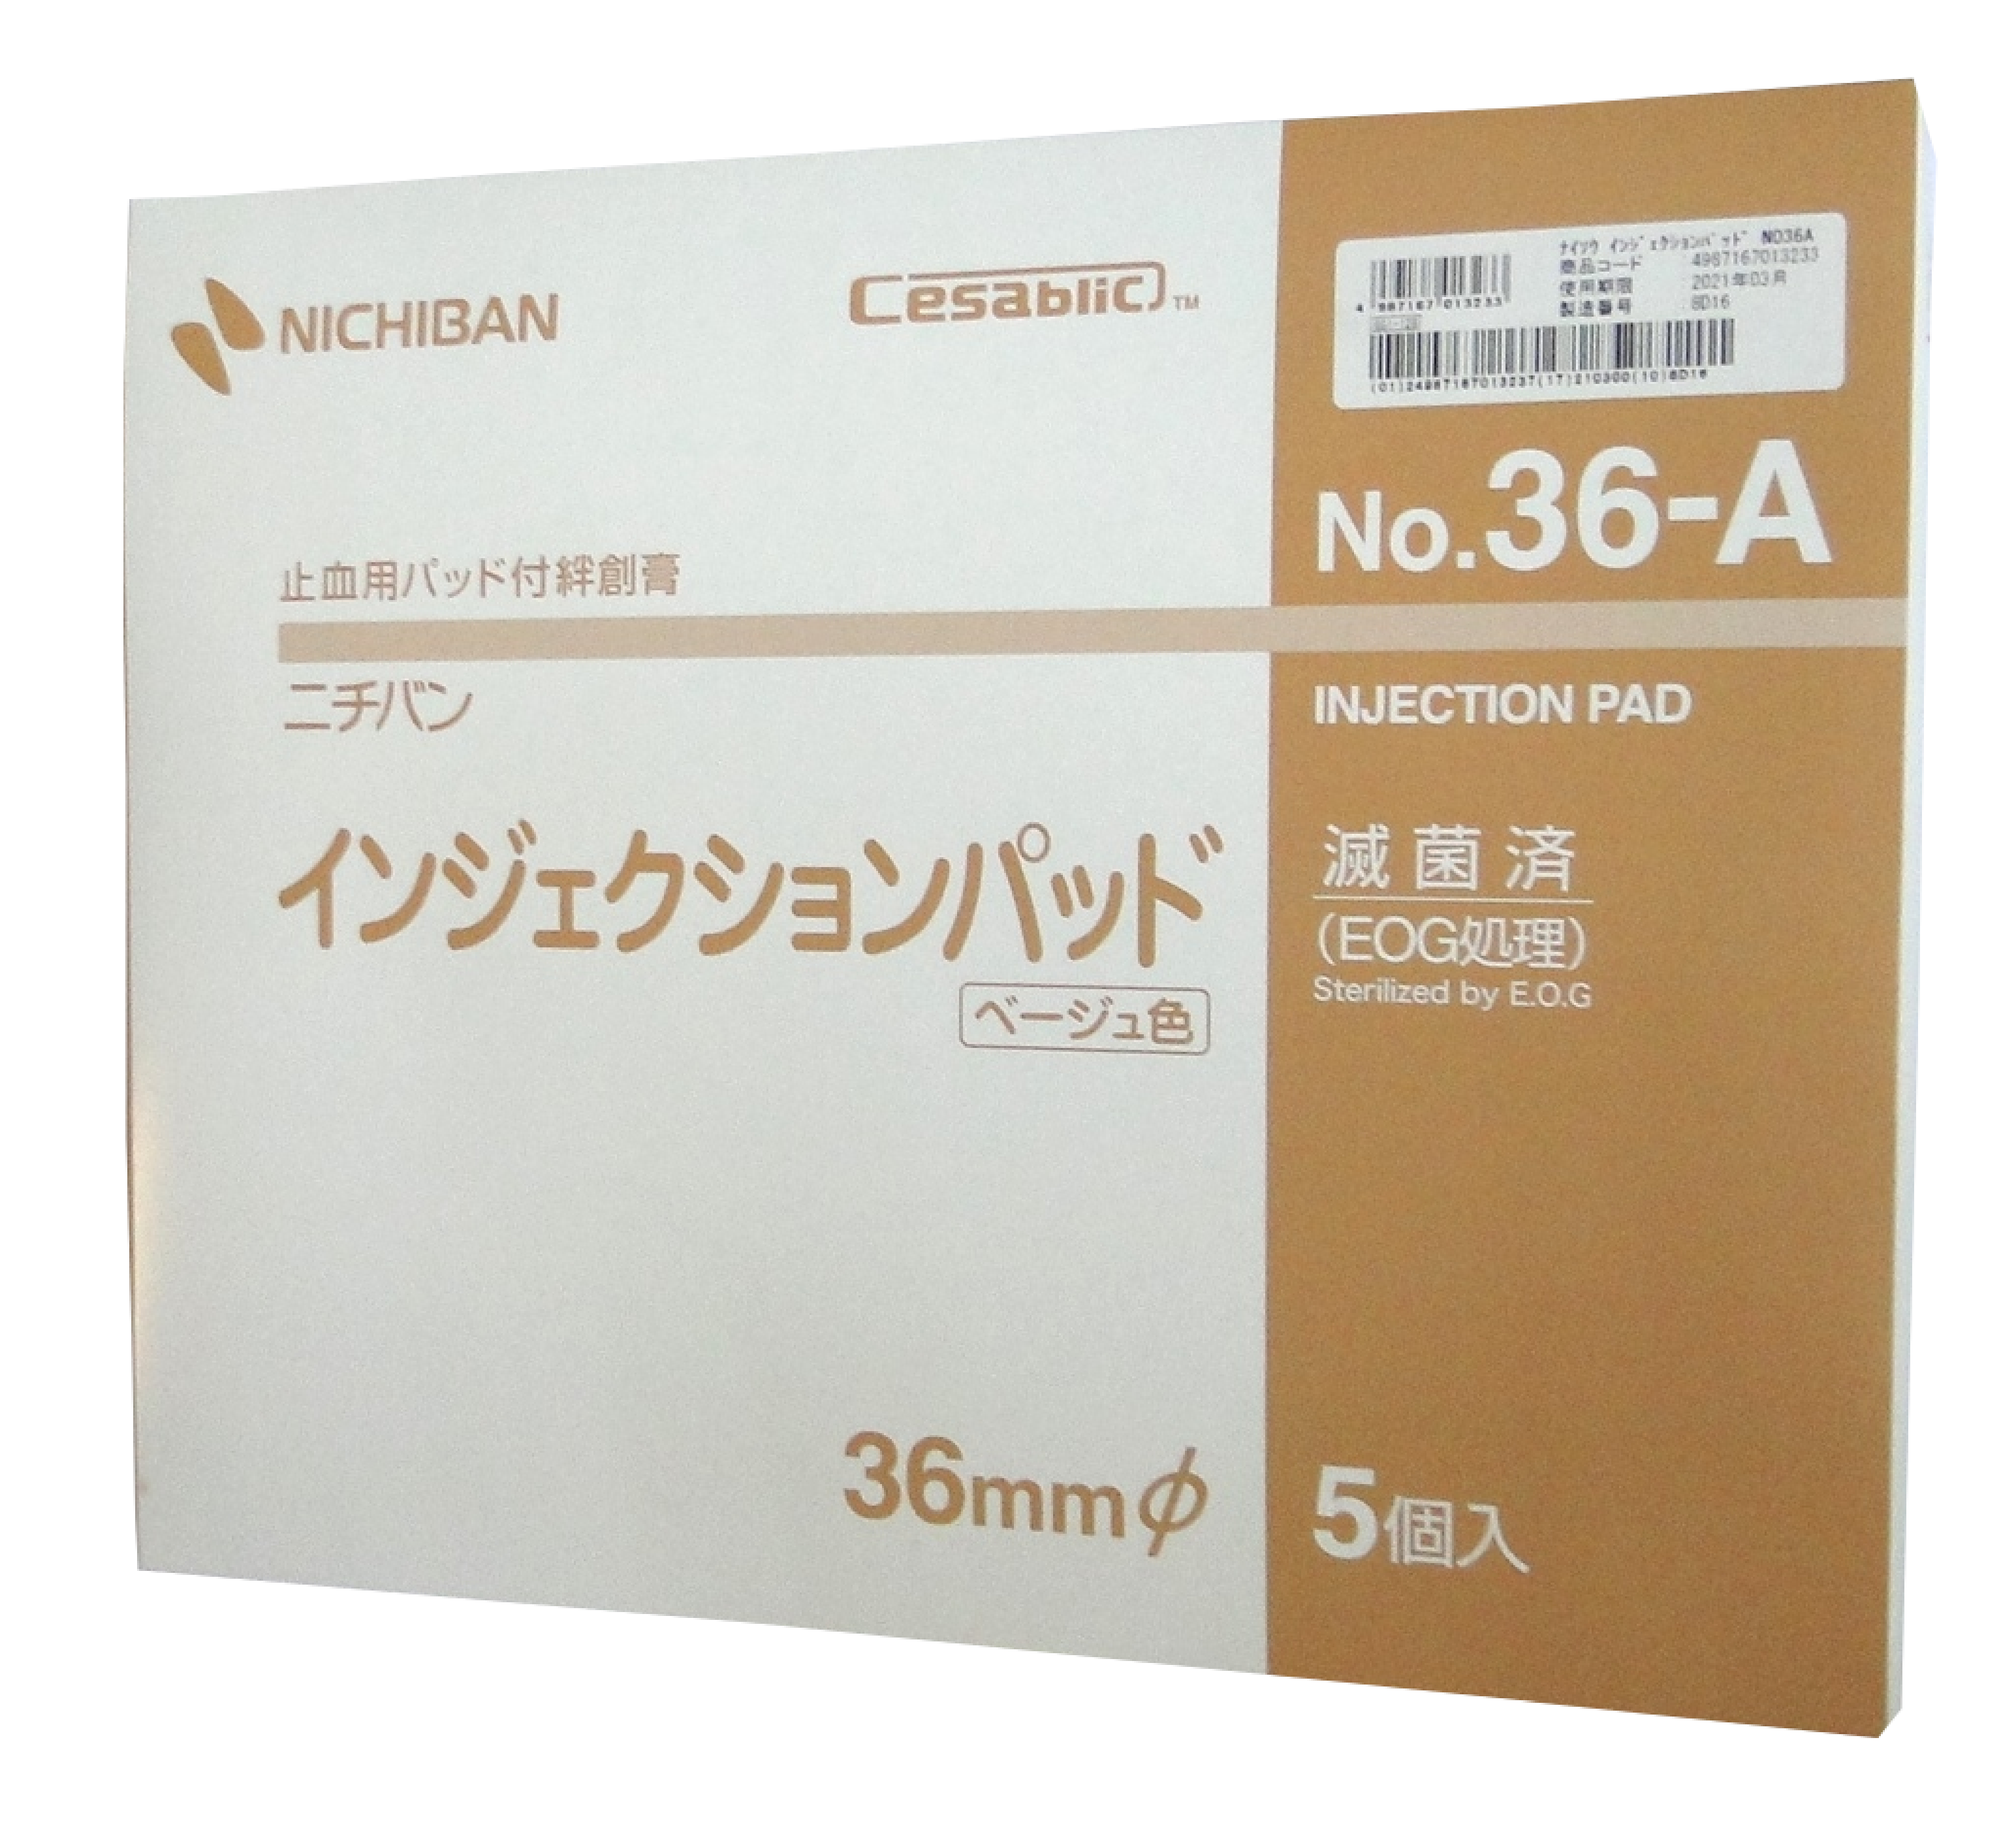 Nichiban 靜脈注射敷貼36 A 36mm 500件